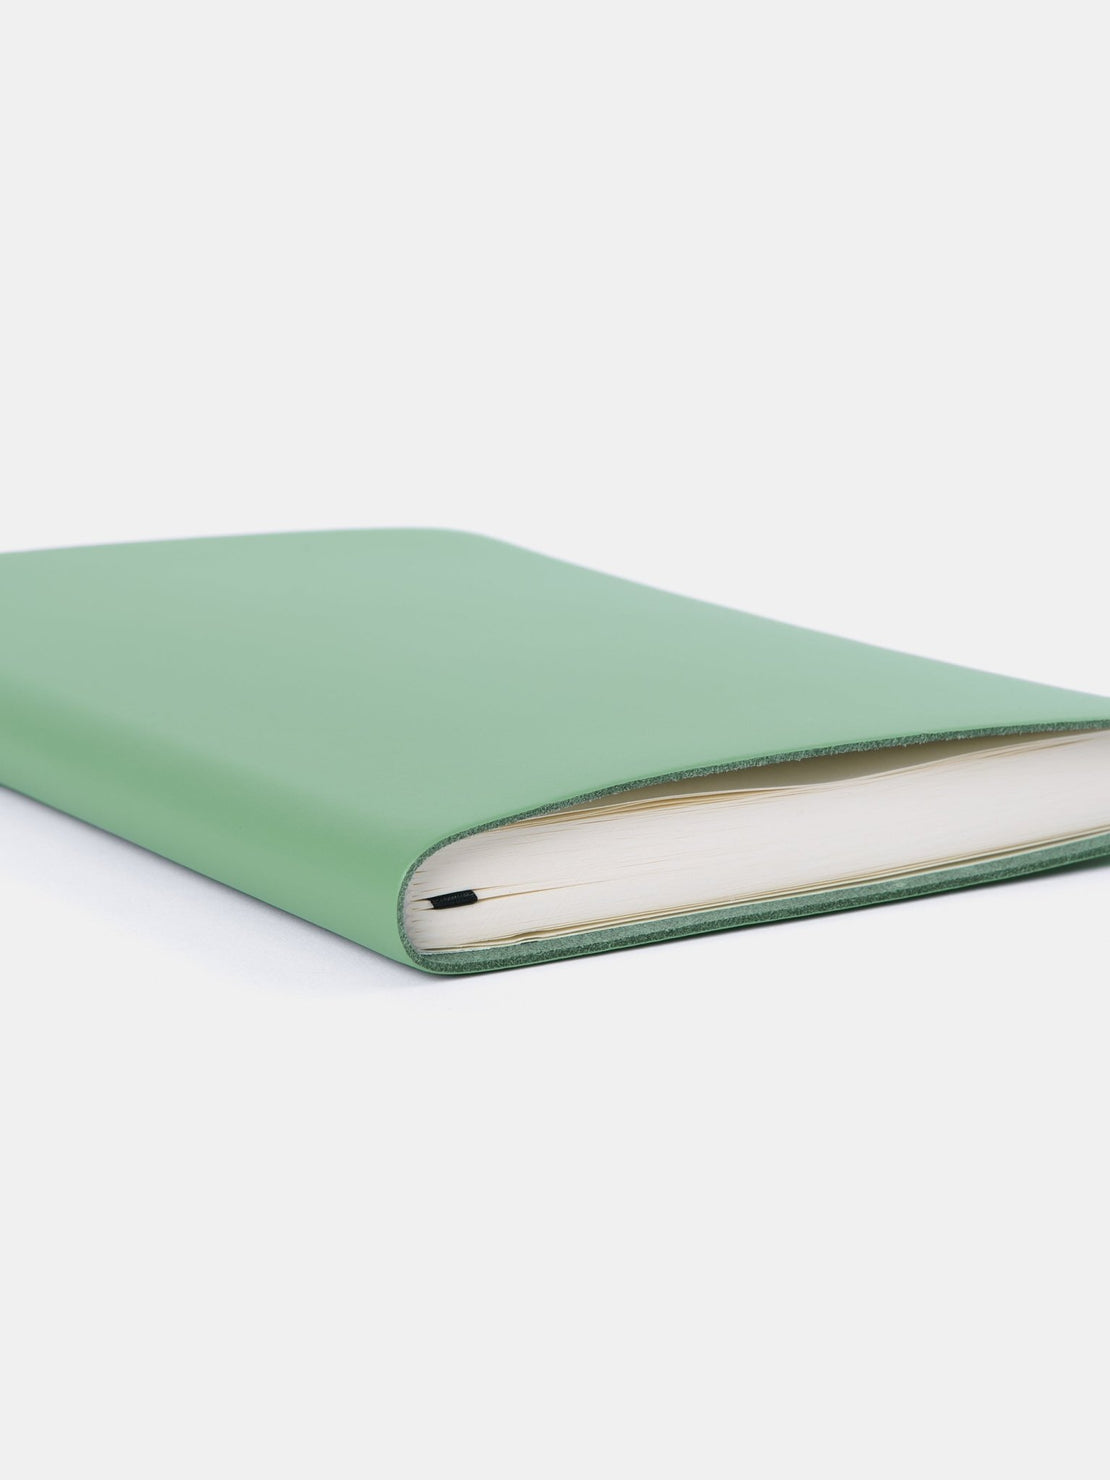 The A5 Notebook - Aloe - The Cambridge Satchel Company EU Store